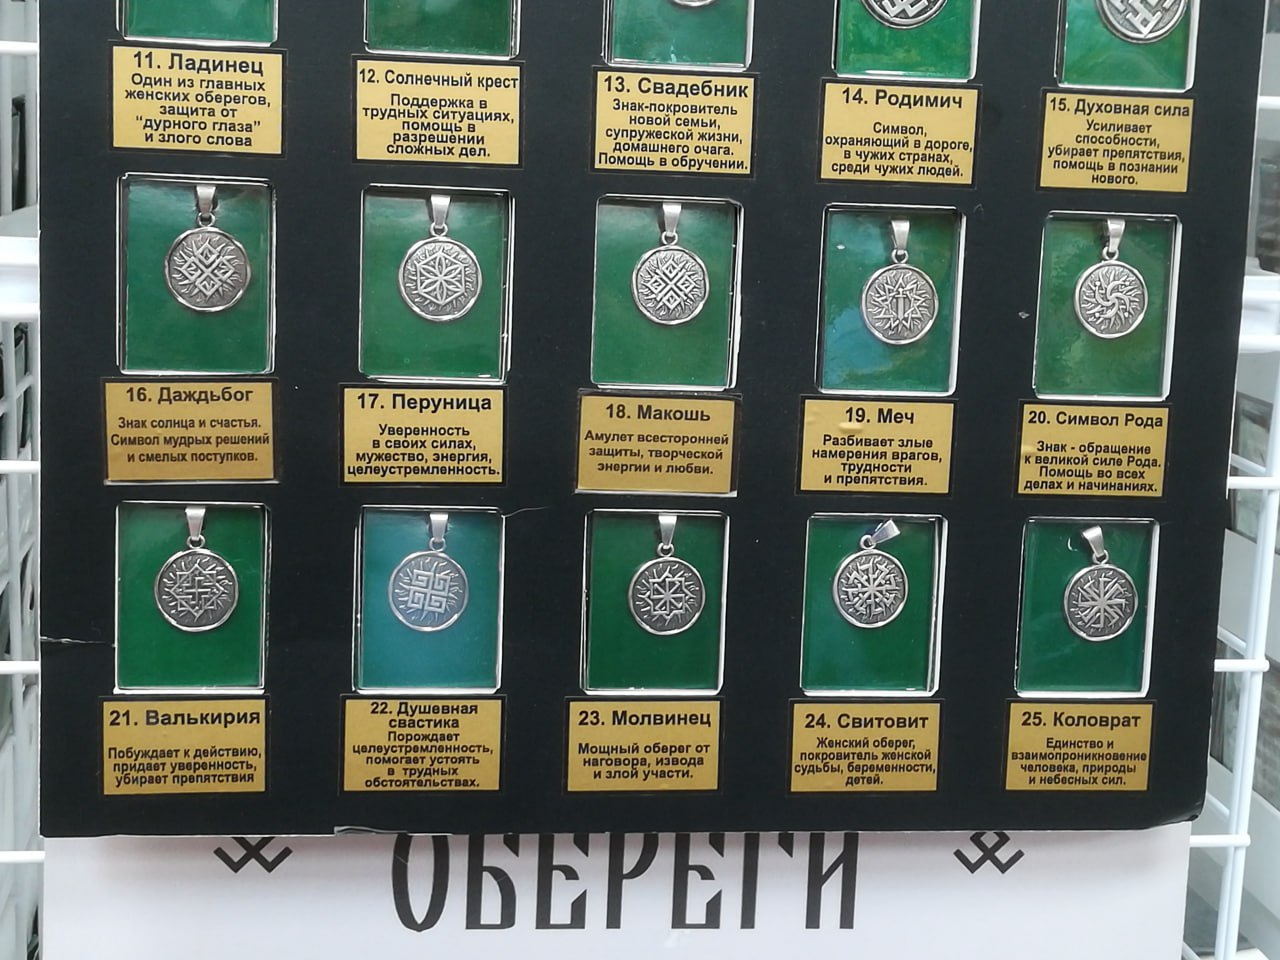 У Києві продають «душевну свастику» для допомоги у важких обставинах фото 1